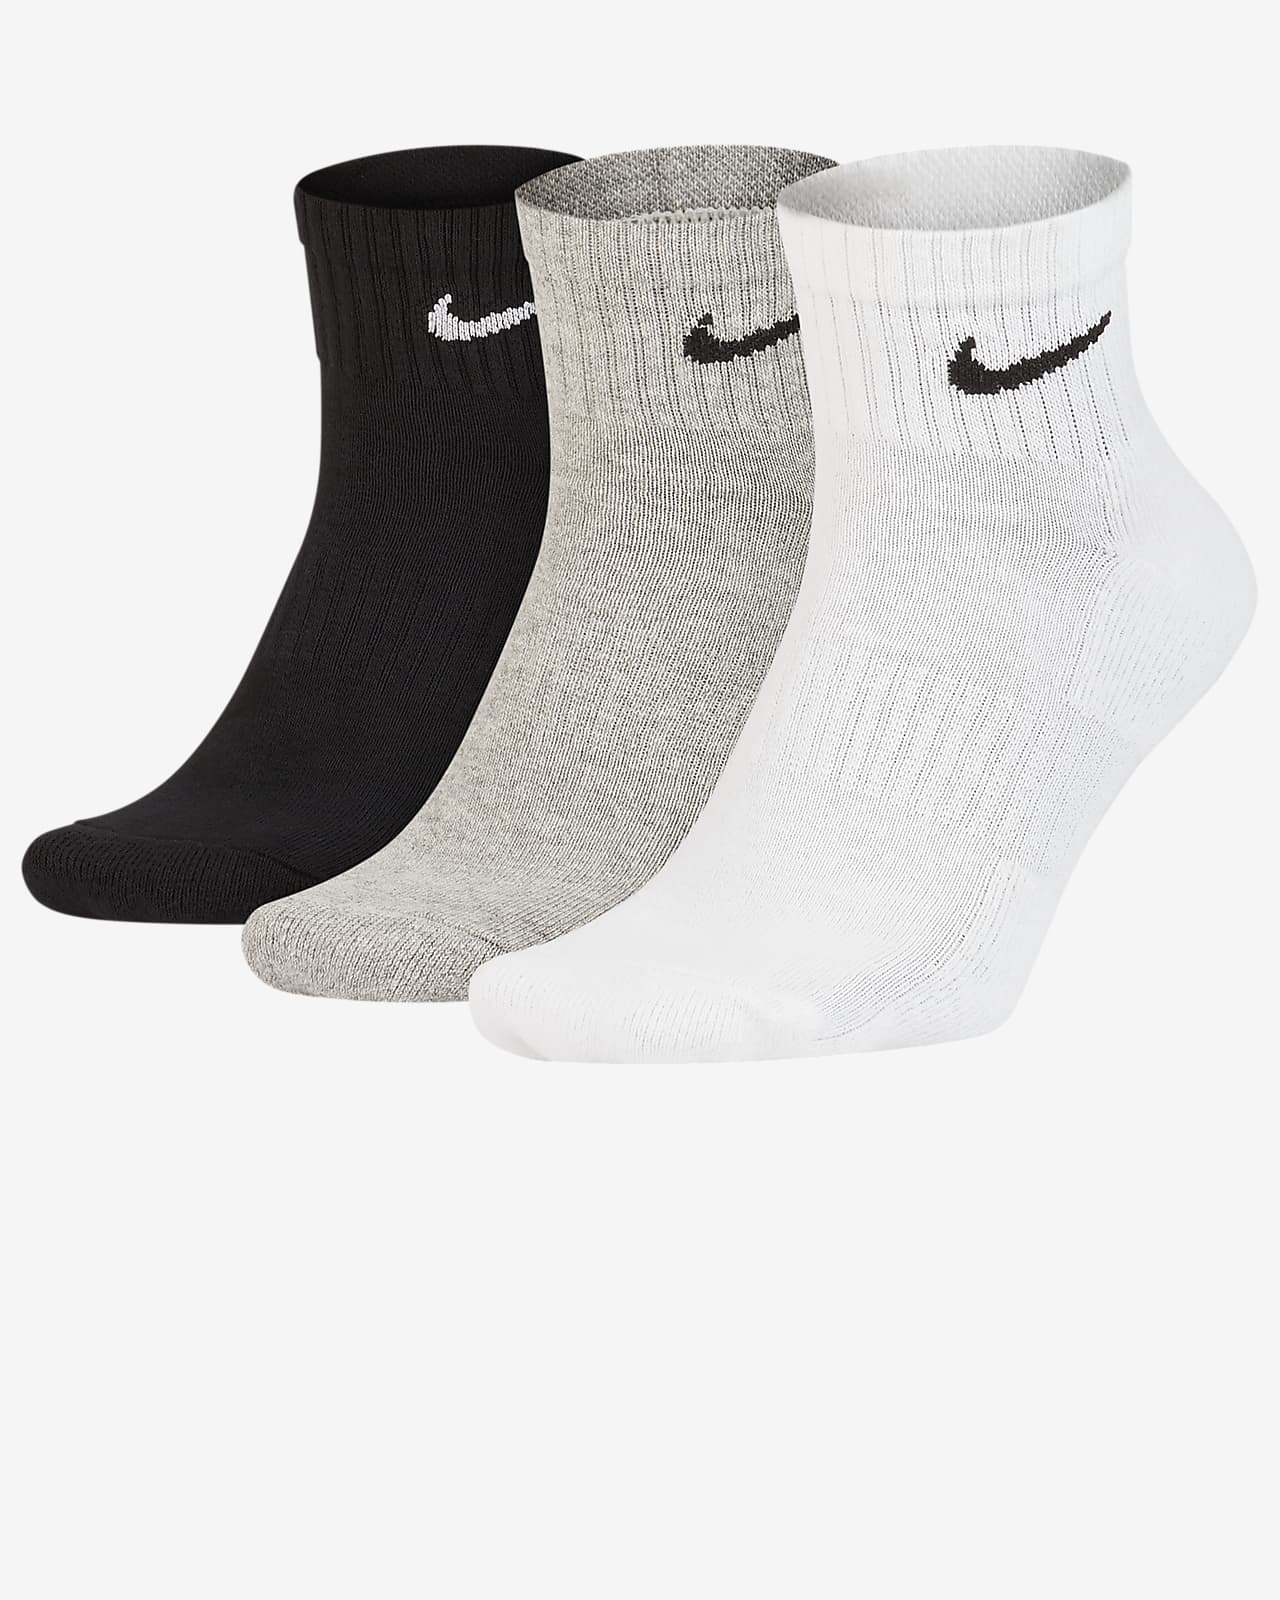 thick nike socks